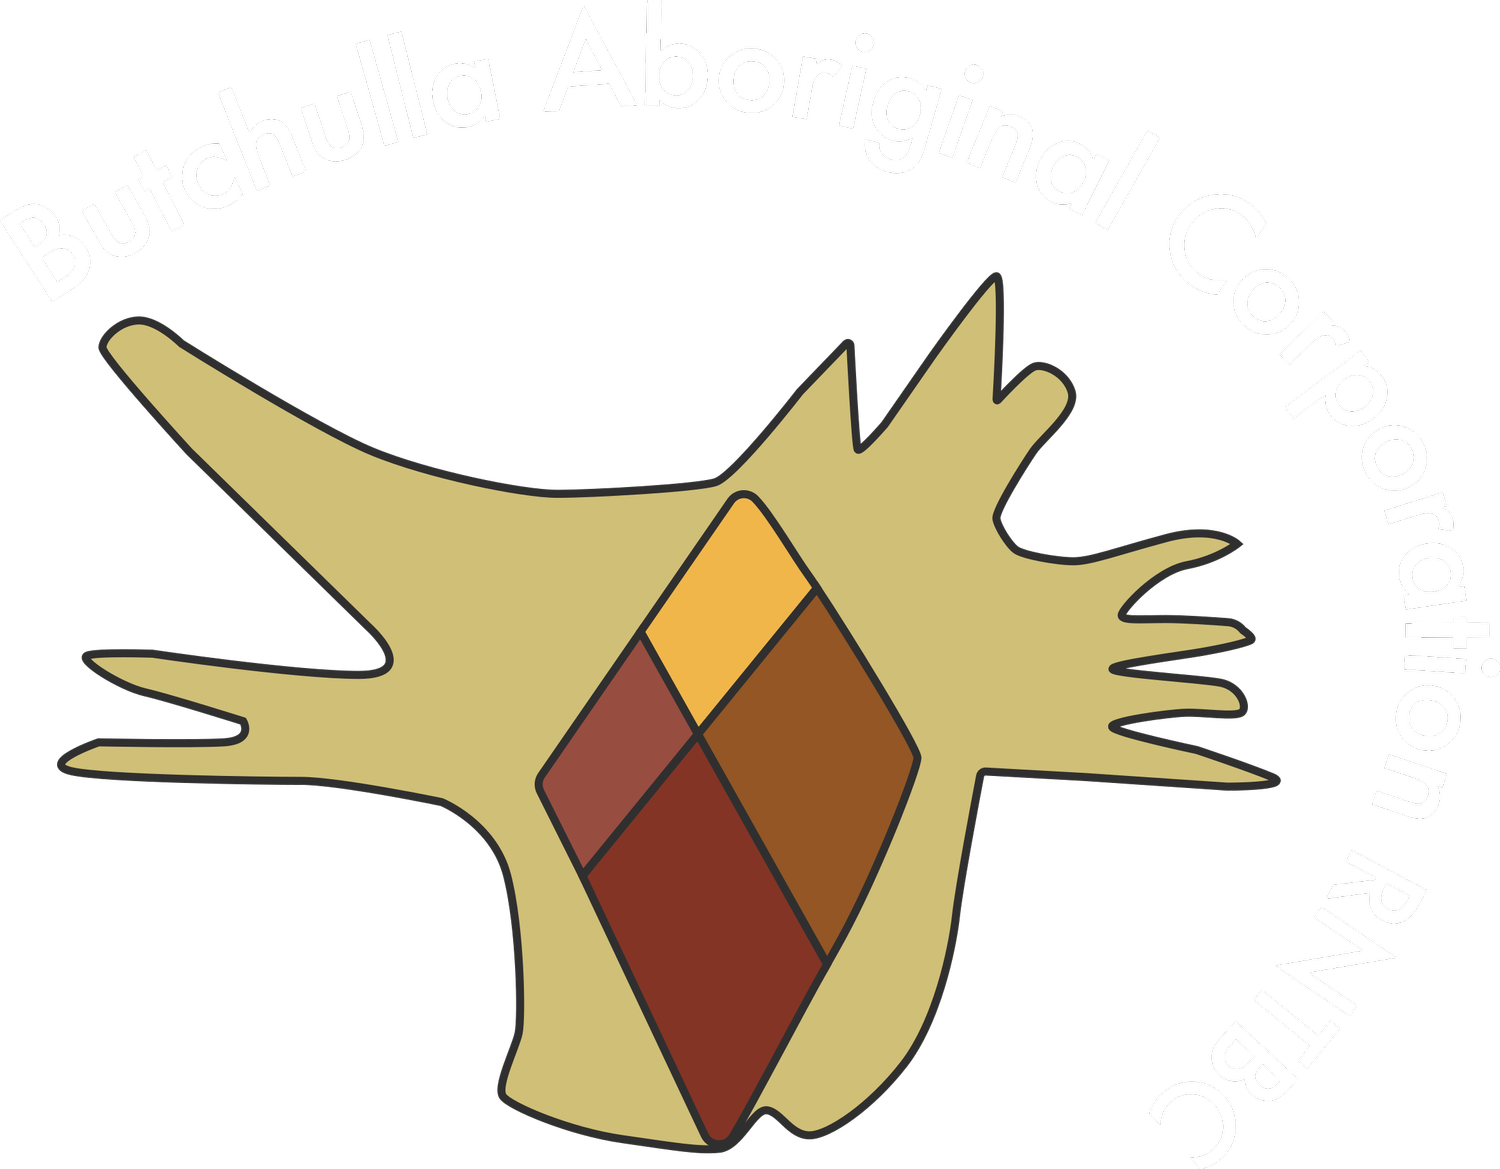 Butchulla Aboriginal Corporation